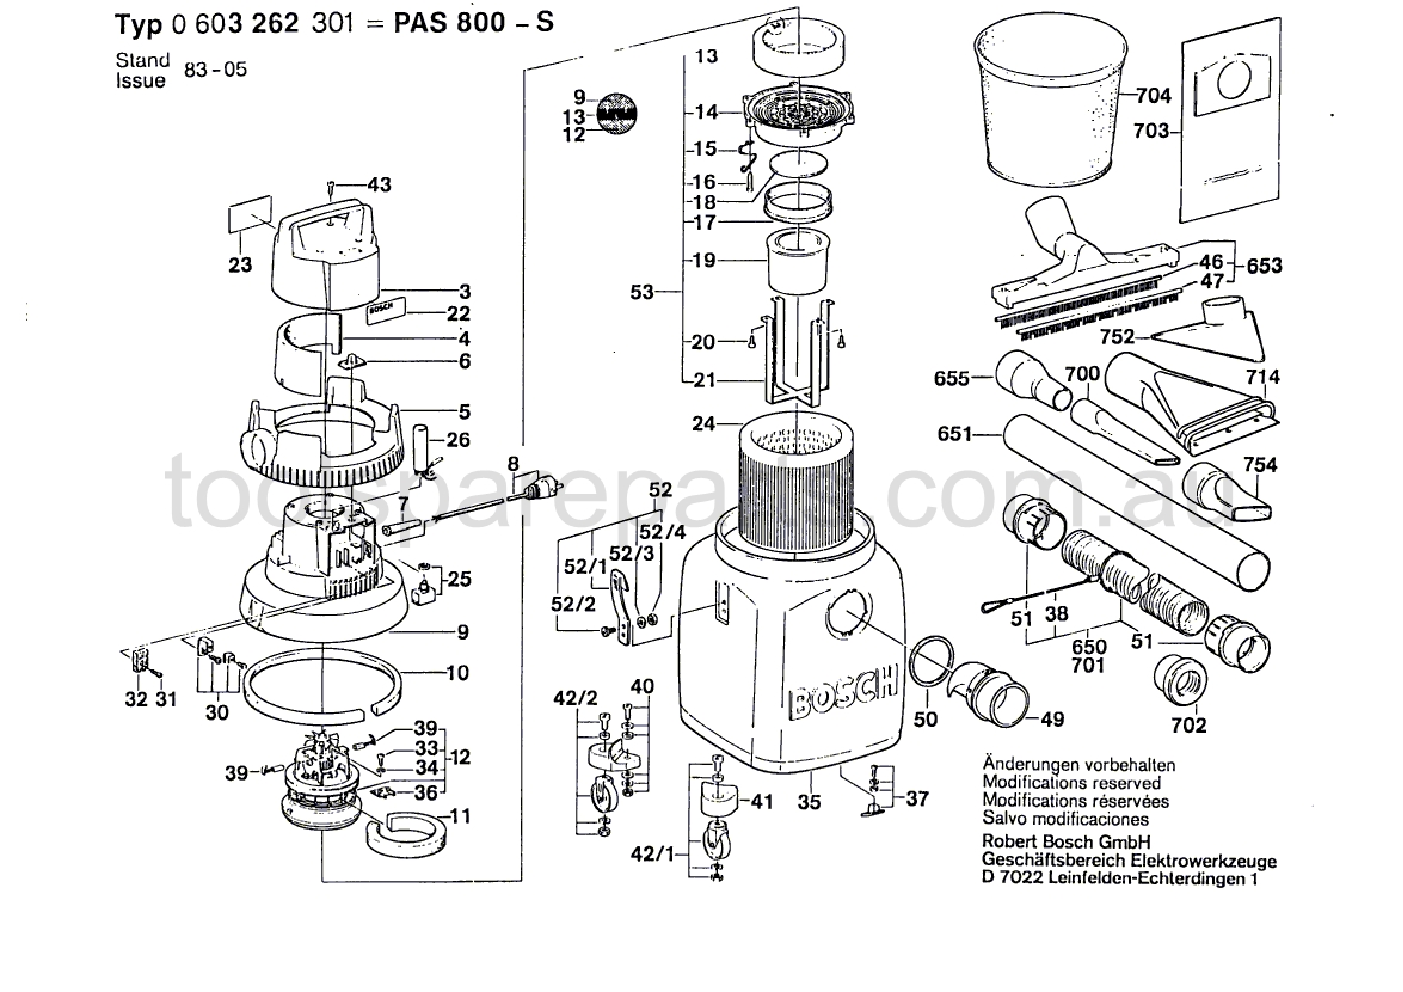 Bosch PAS 800-S 0603262301  Diagram 1